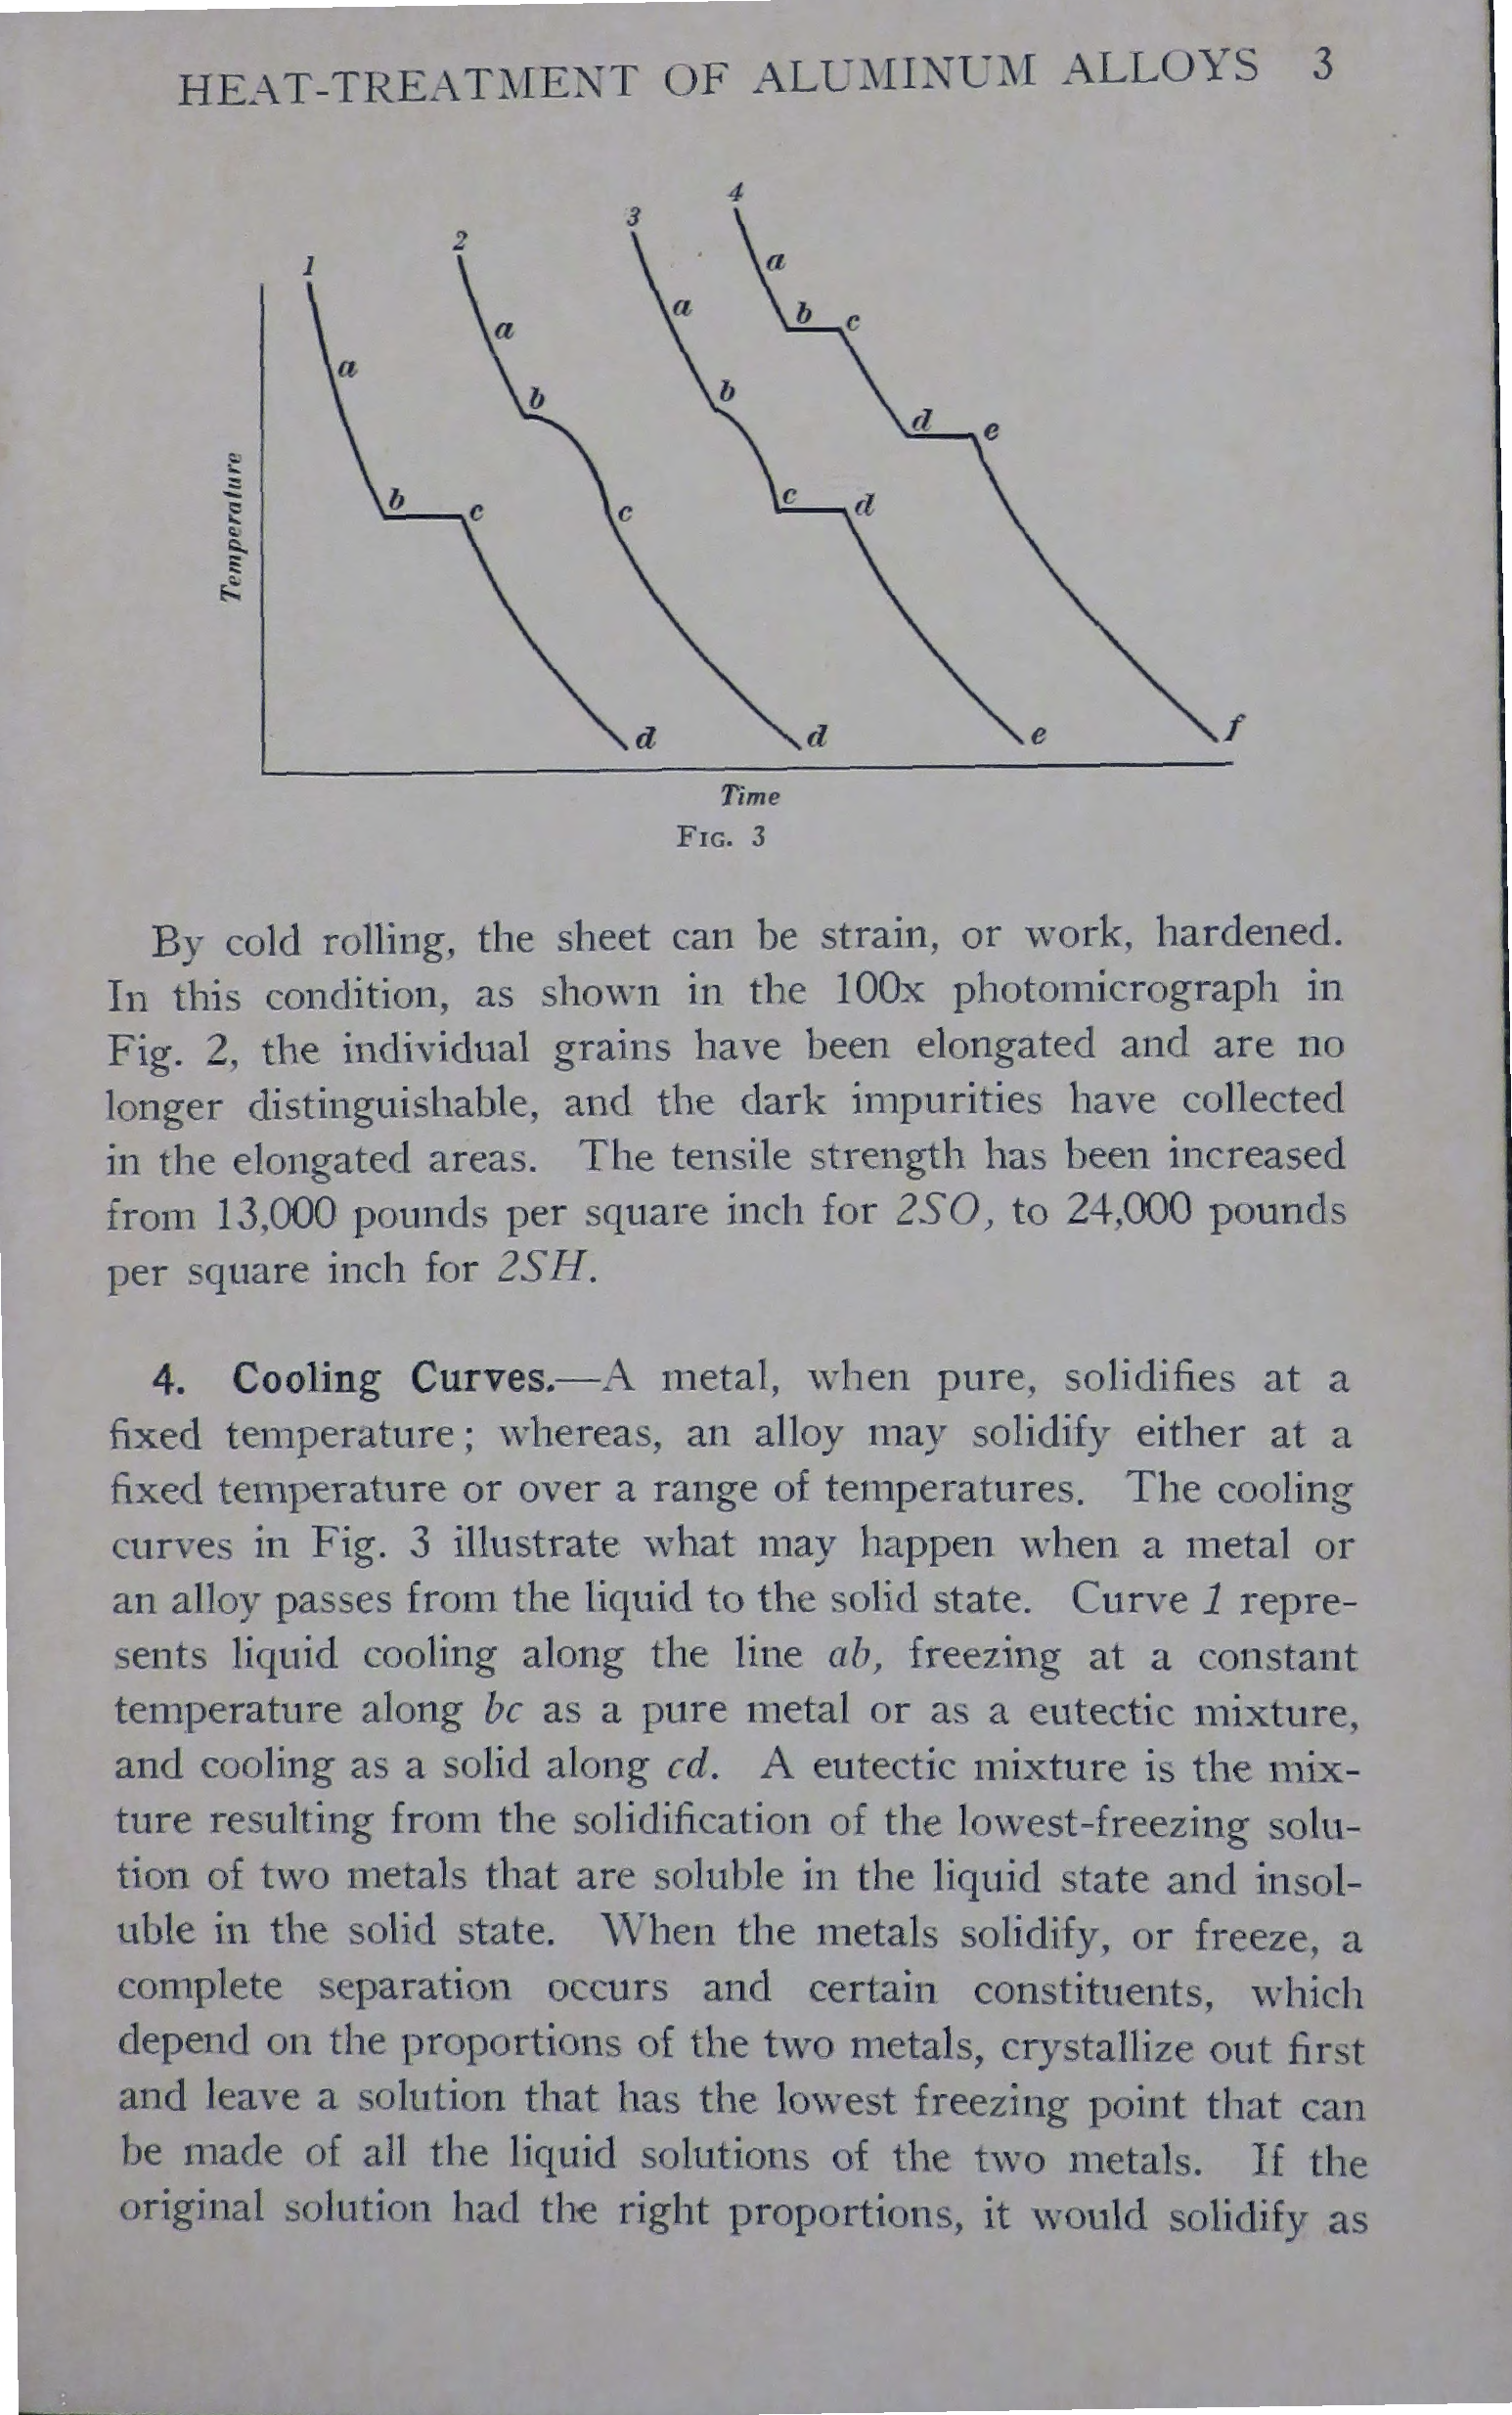 Sample page 5 from AirCorps Library document: Heat Treating - Heat Treatment of Aluminum Alloys - Bureau of Aeronautics